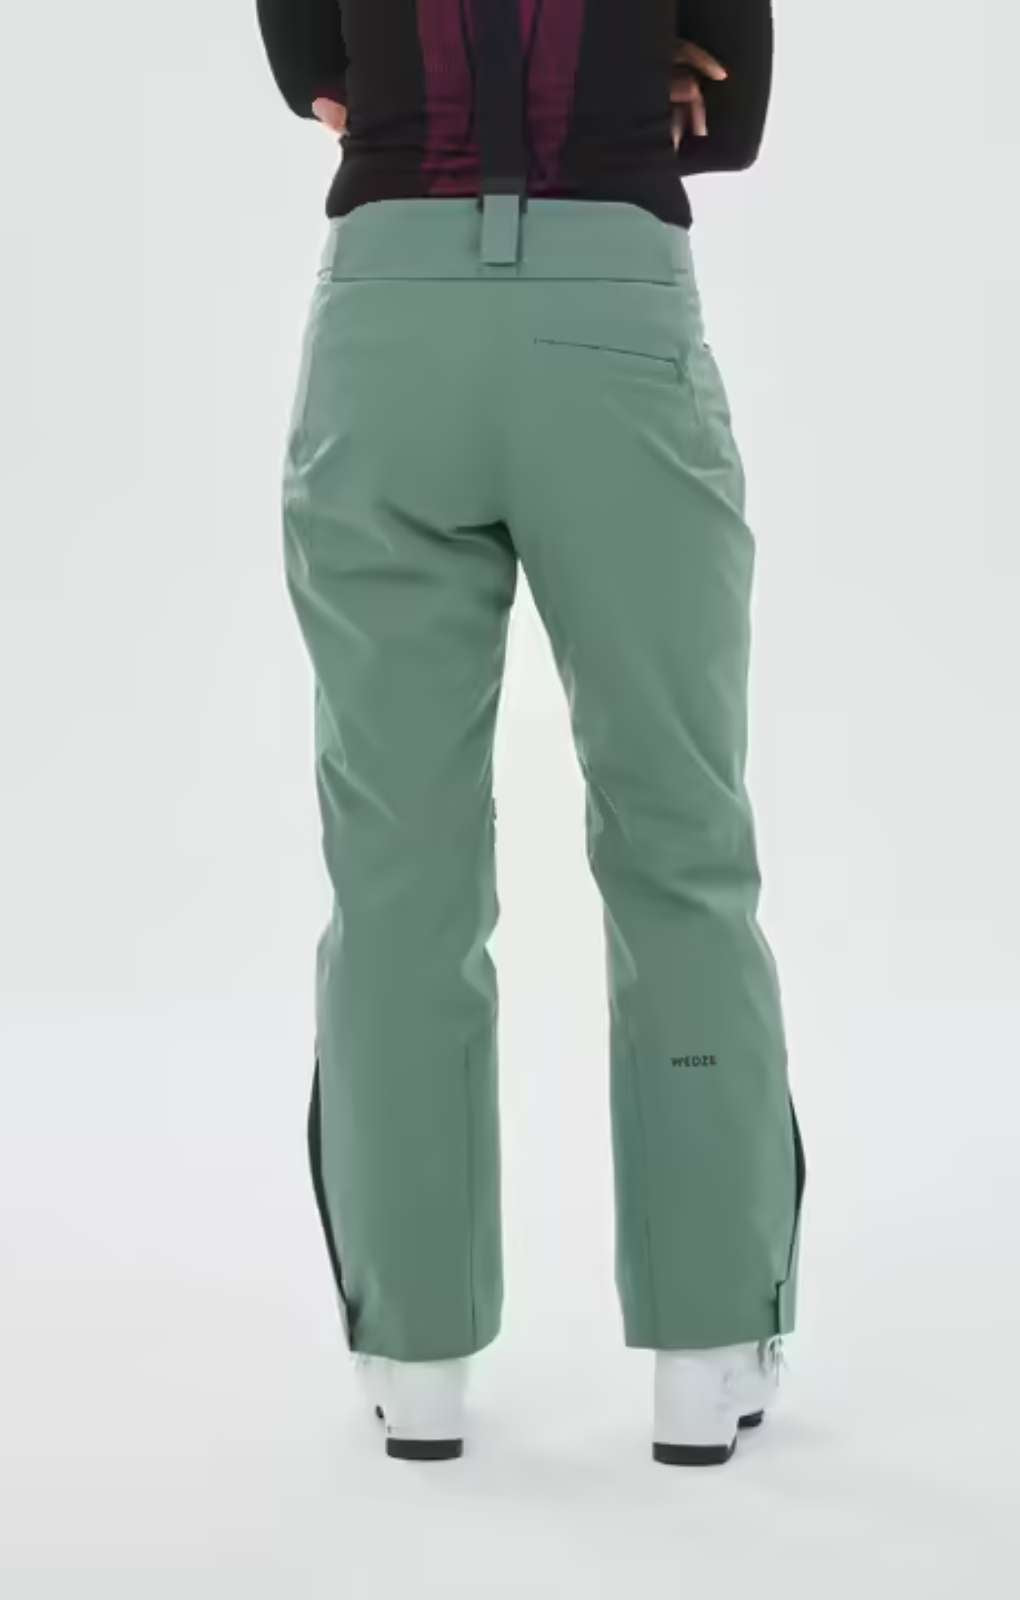 Decathlon Green Women's Downhill Ski Trousers product image